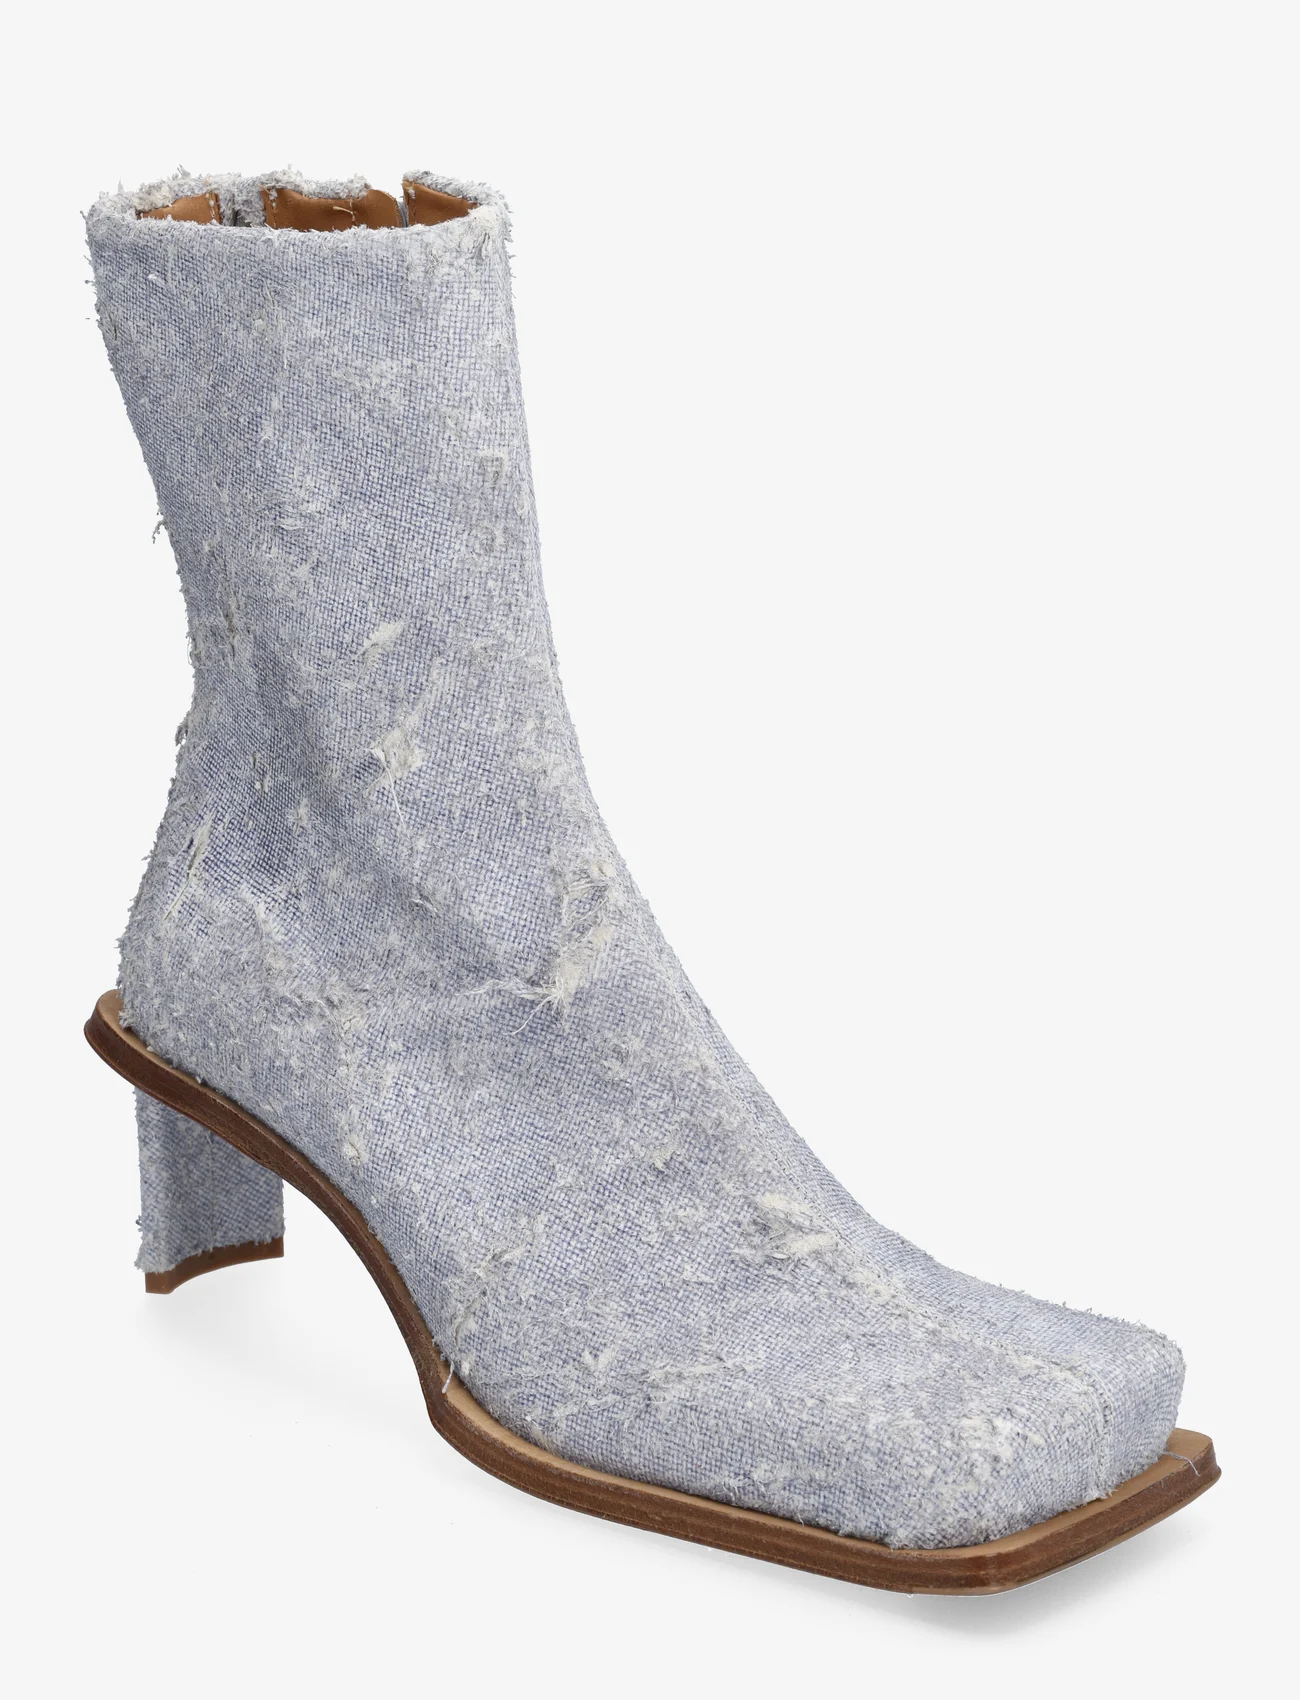 MIISTA - Brenda Denim Ankle Boots - stövletter - blue - 1